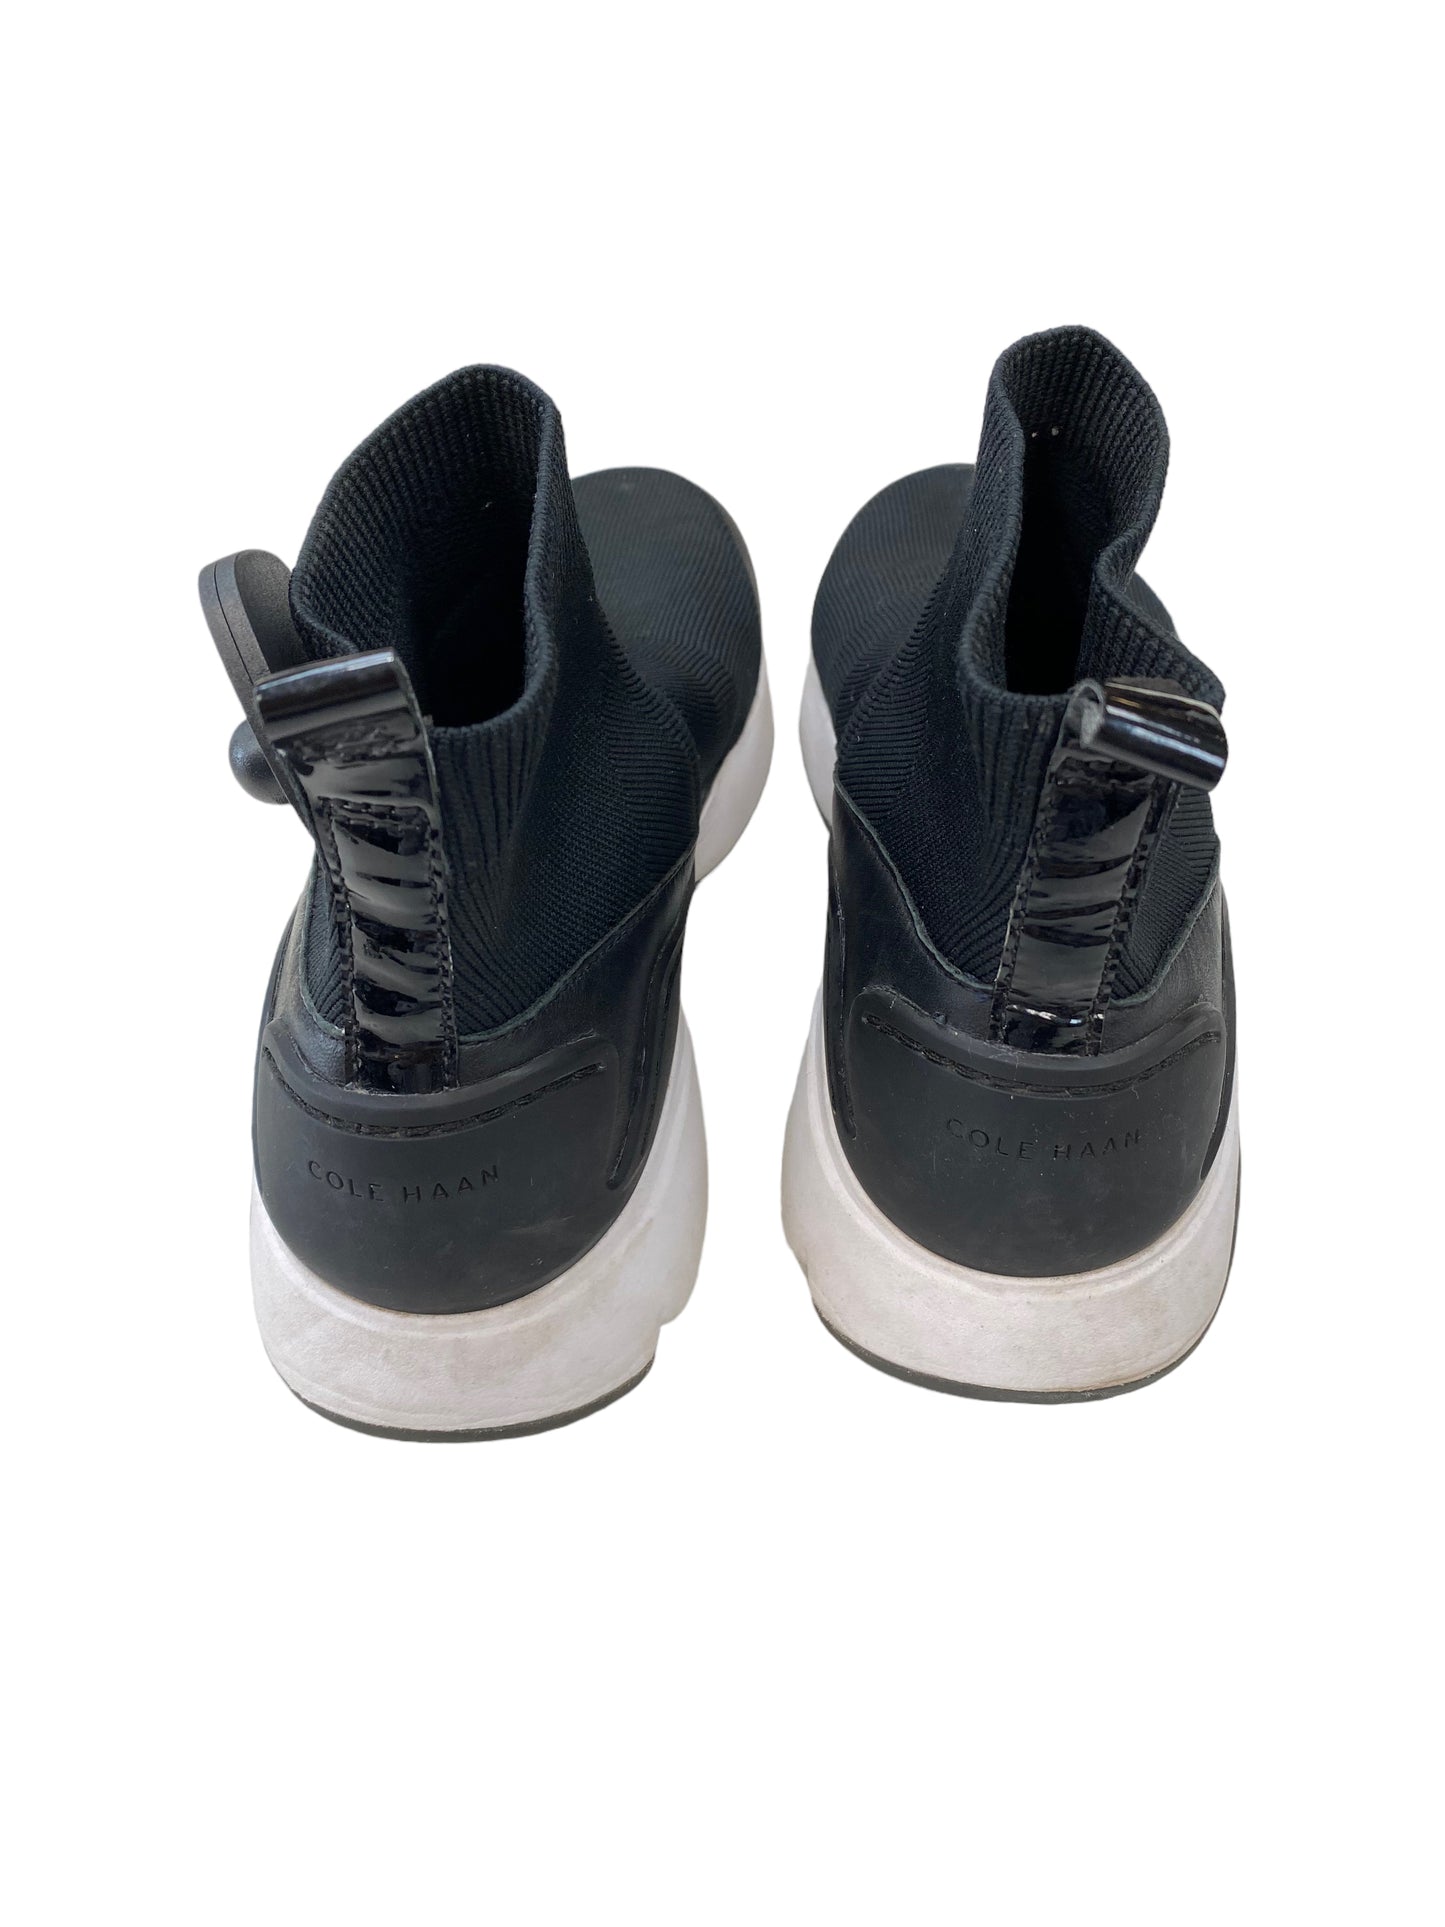 Black Shoes Athletic Cole-haan, Size 8